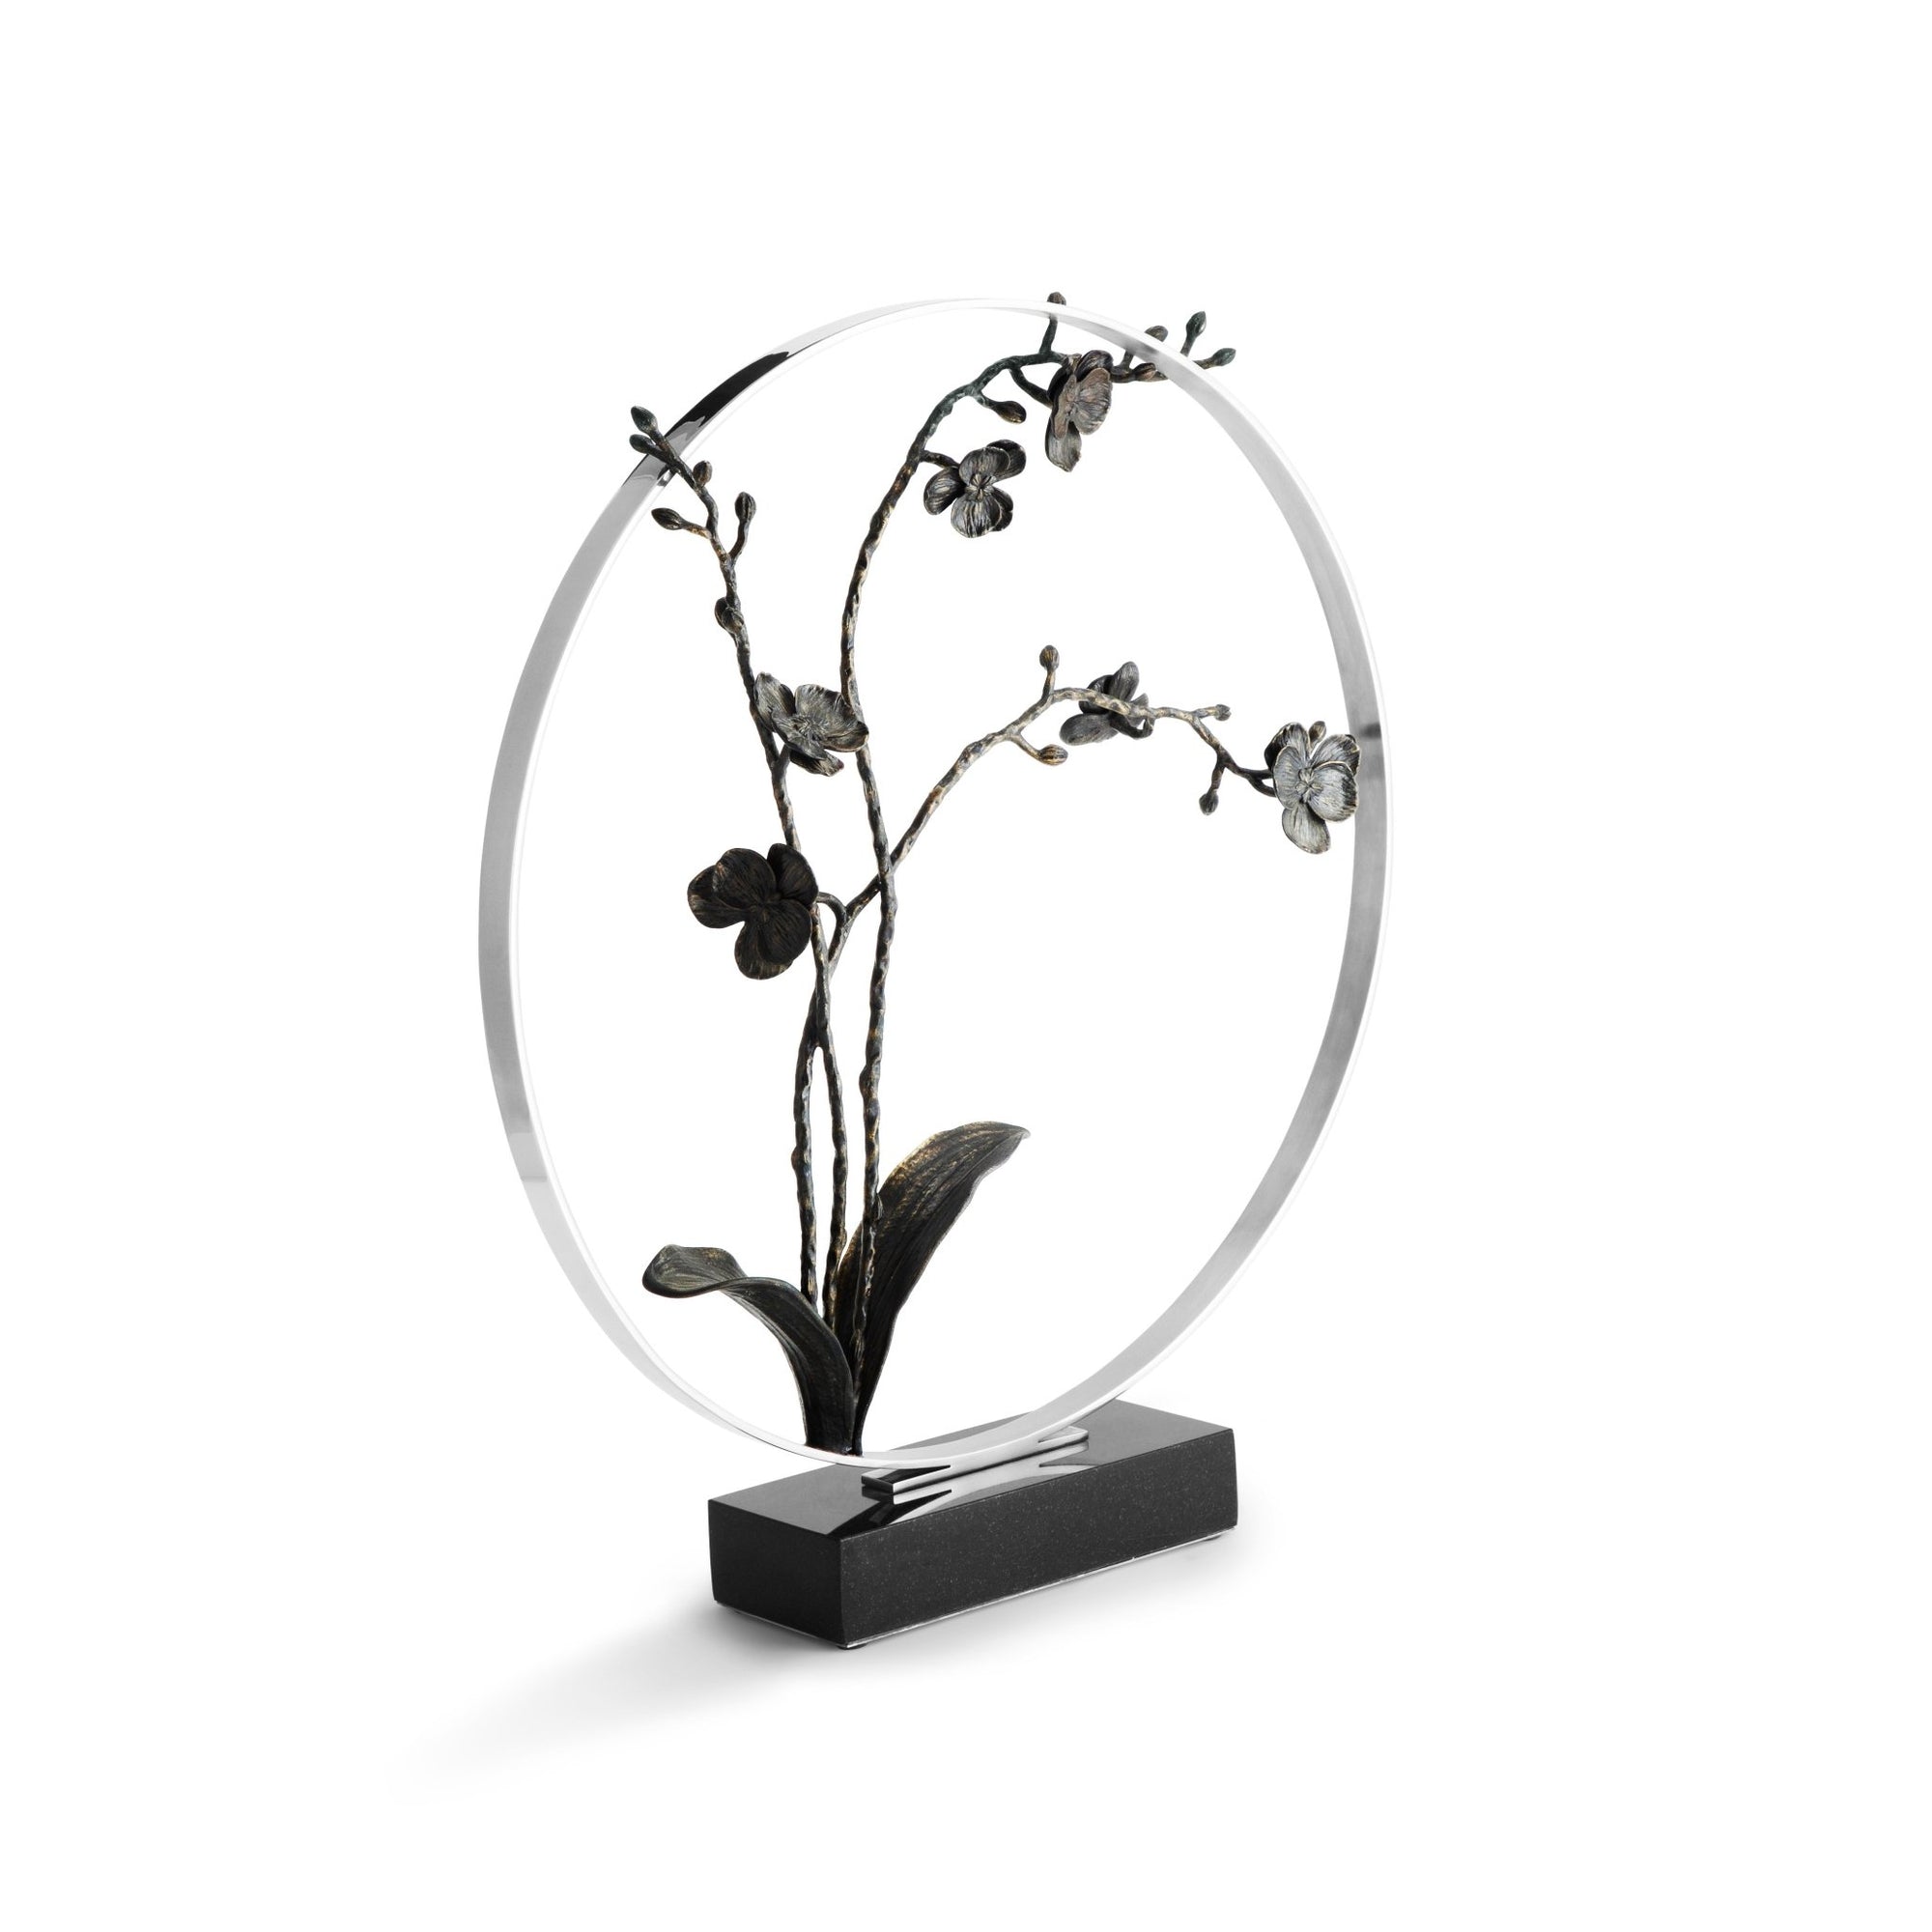 Michael Aram Black Orchid 22" Moon Gate Sculpture